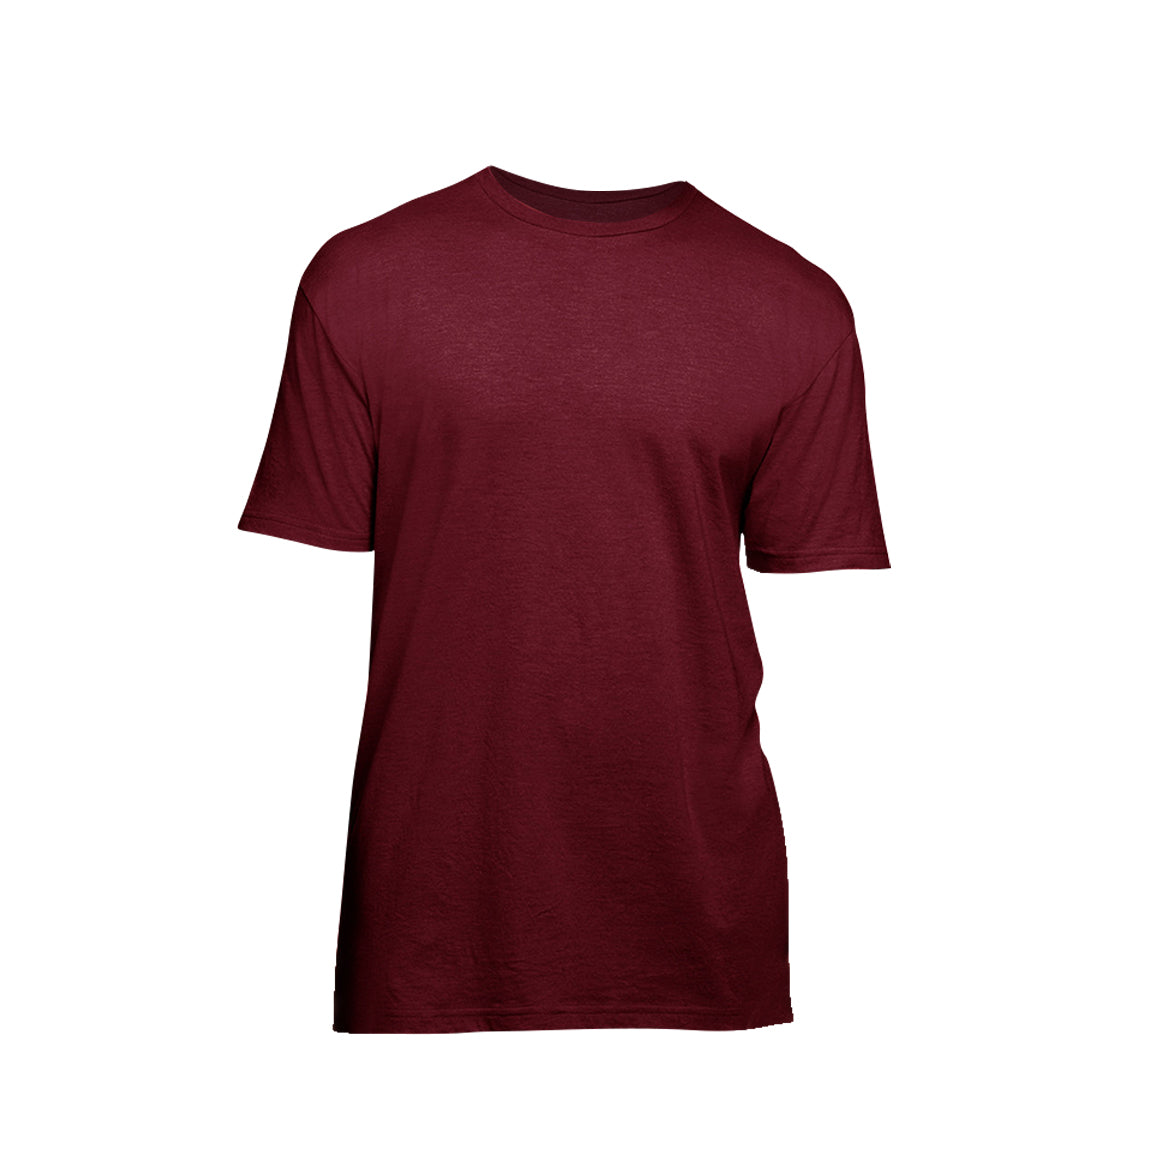 Gildan Men's Softstyle CVC T-Shirt